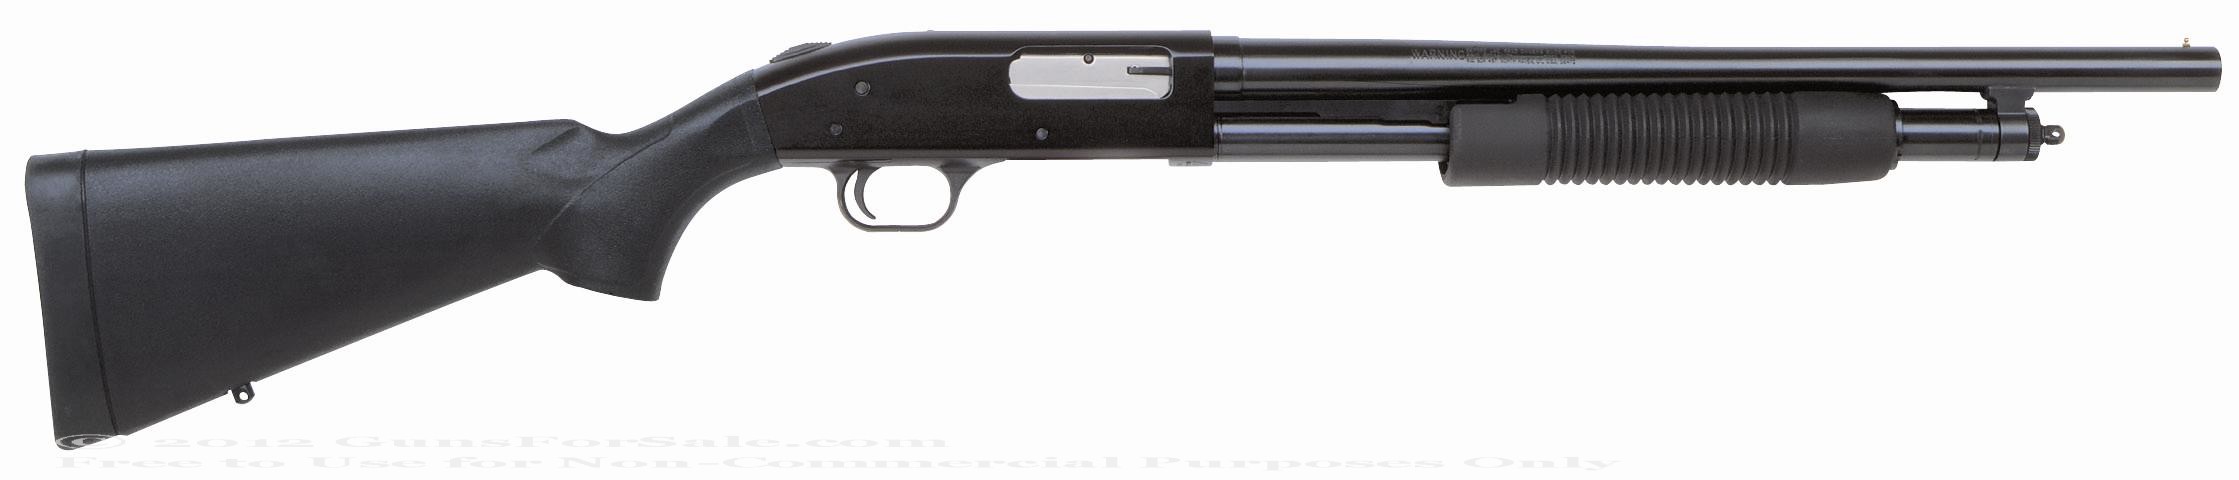 mossberg security shotgun